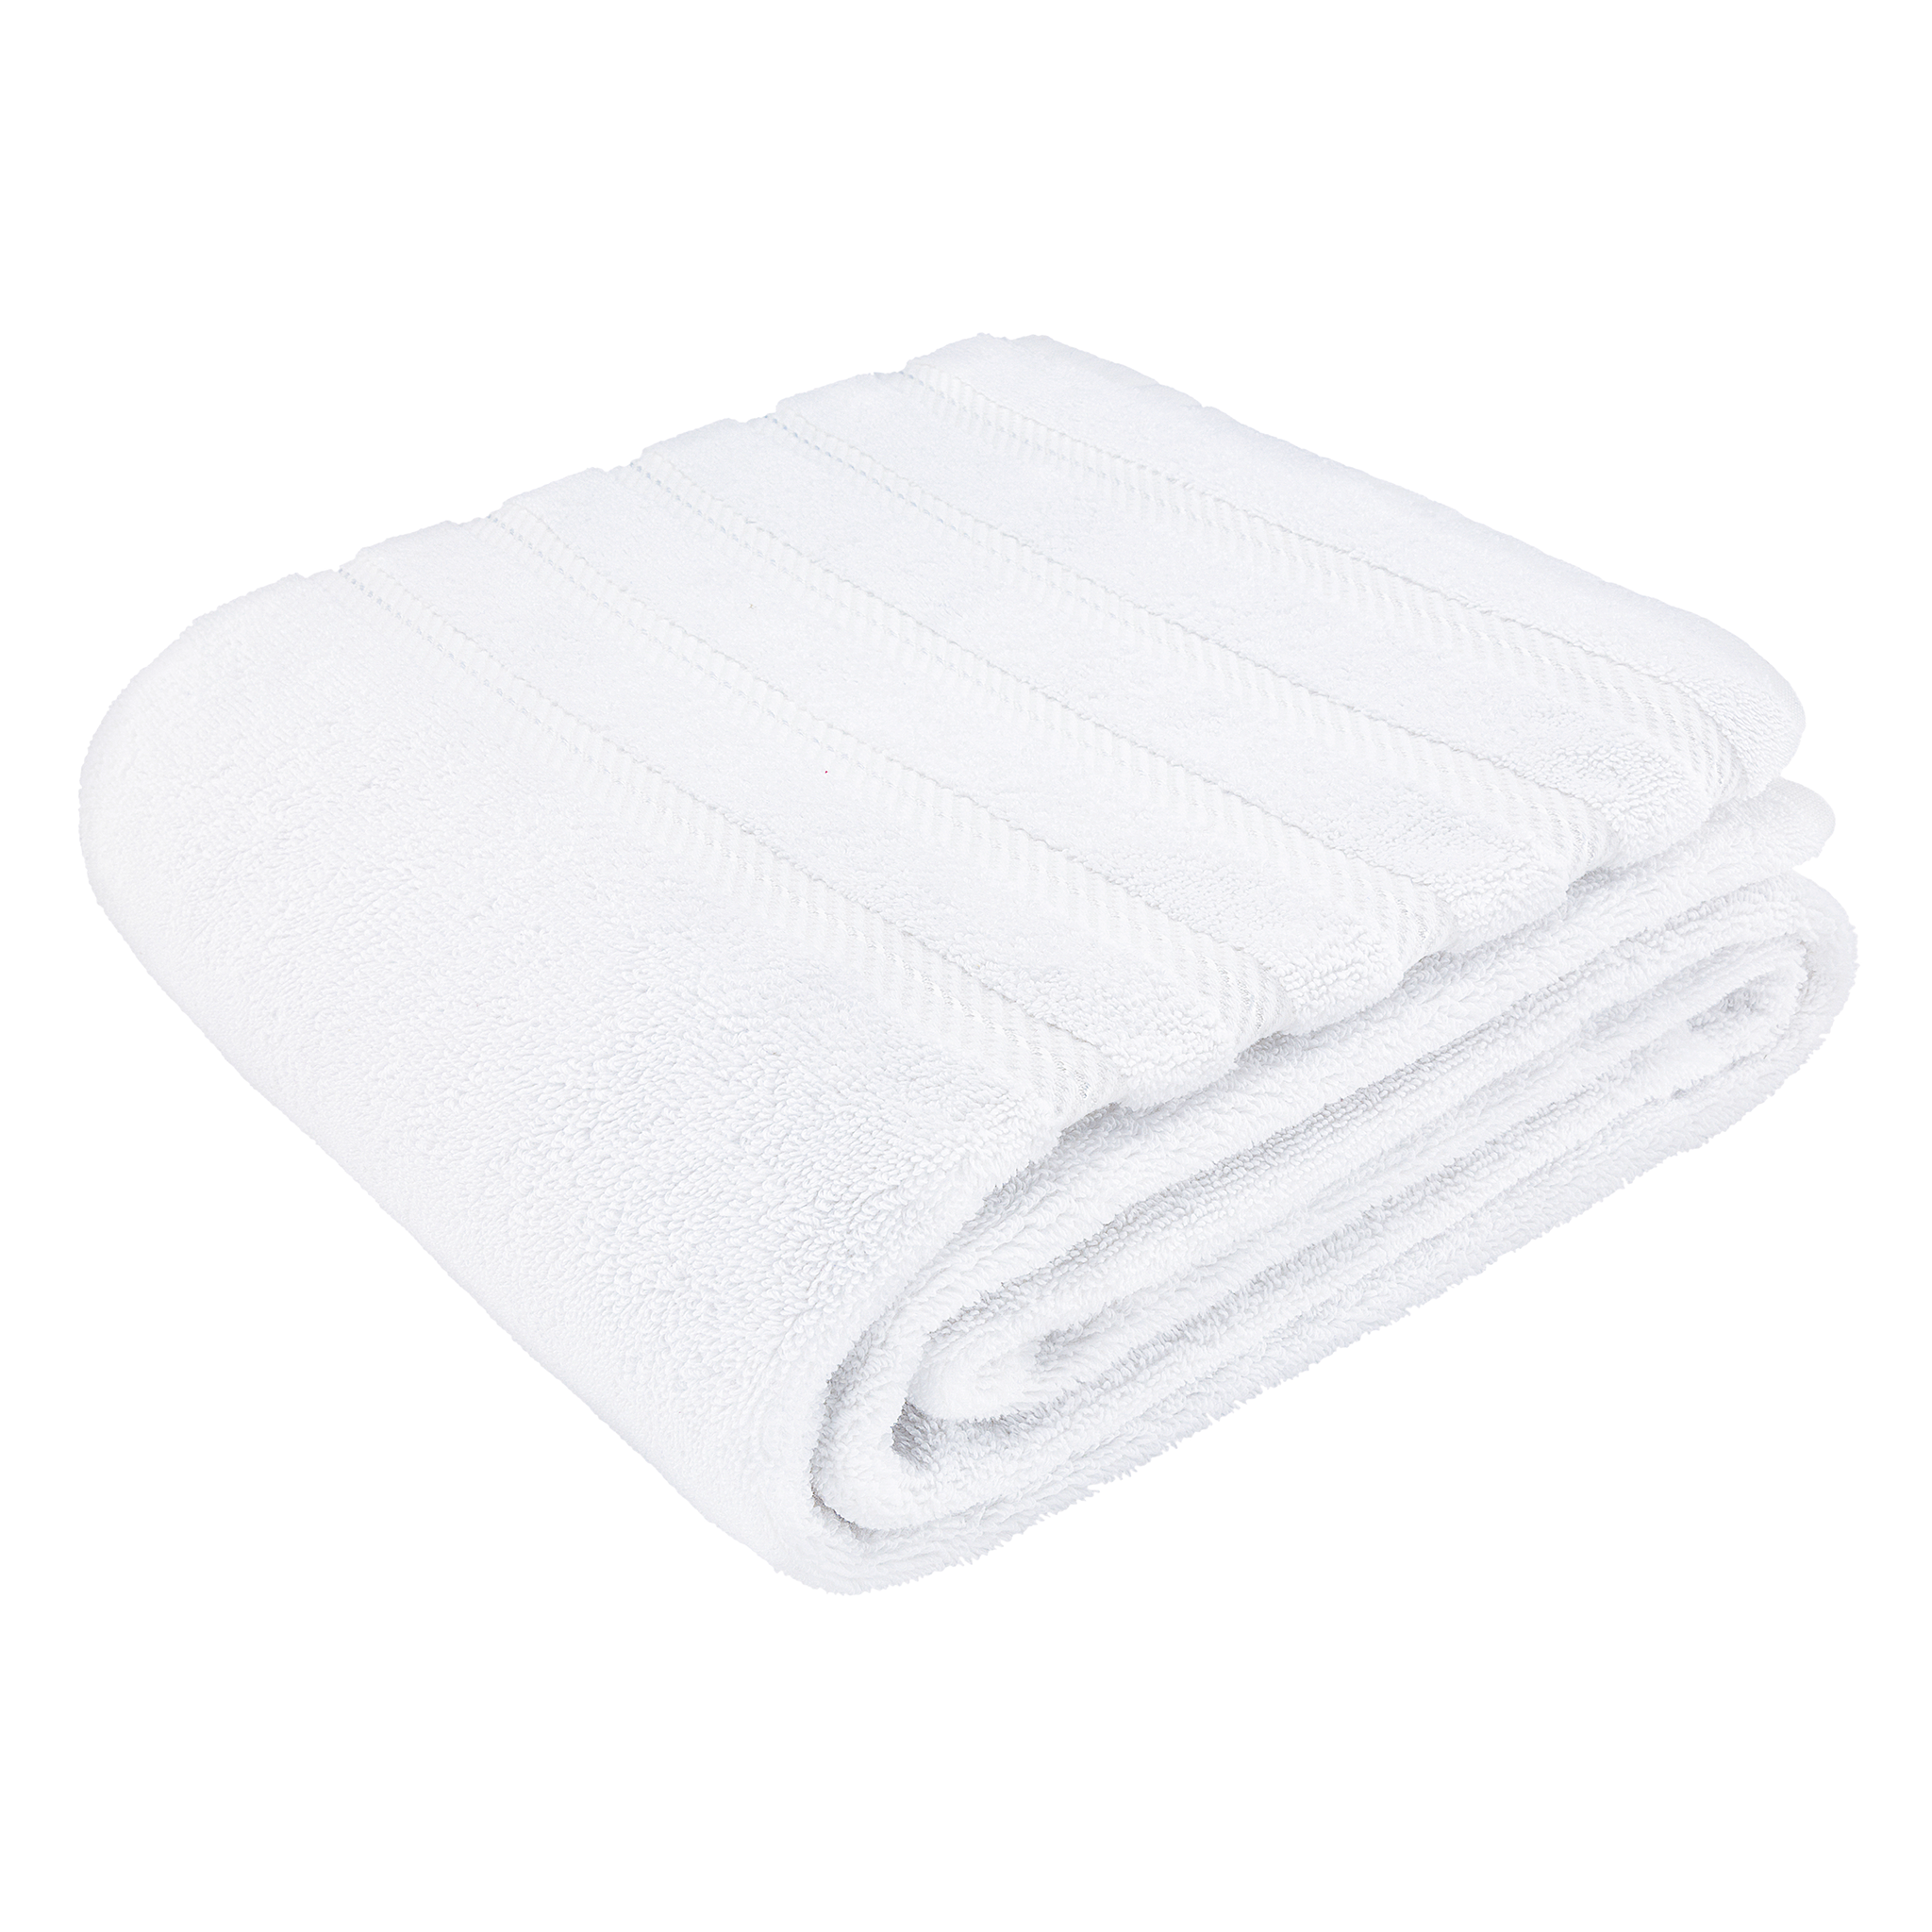 American Soft Linen - 35x70 Jumbo Bath Sheet Turkish Bath Towel - 16 Piece Case Pack - White - 7